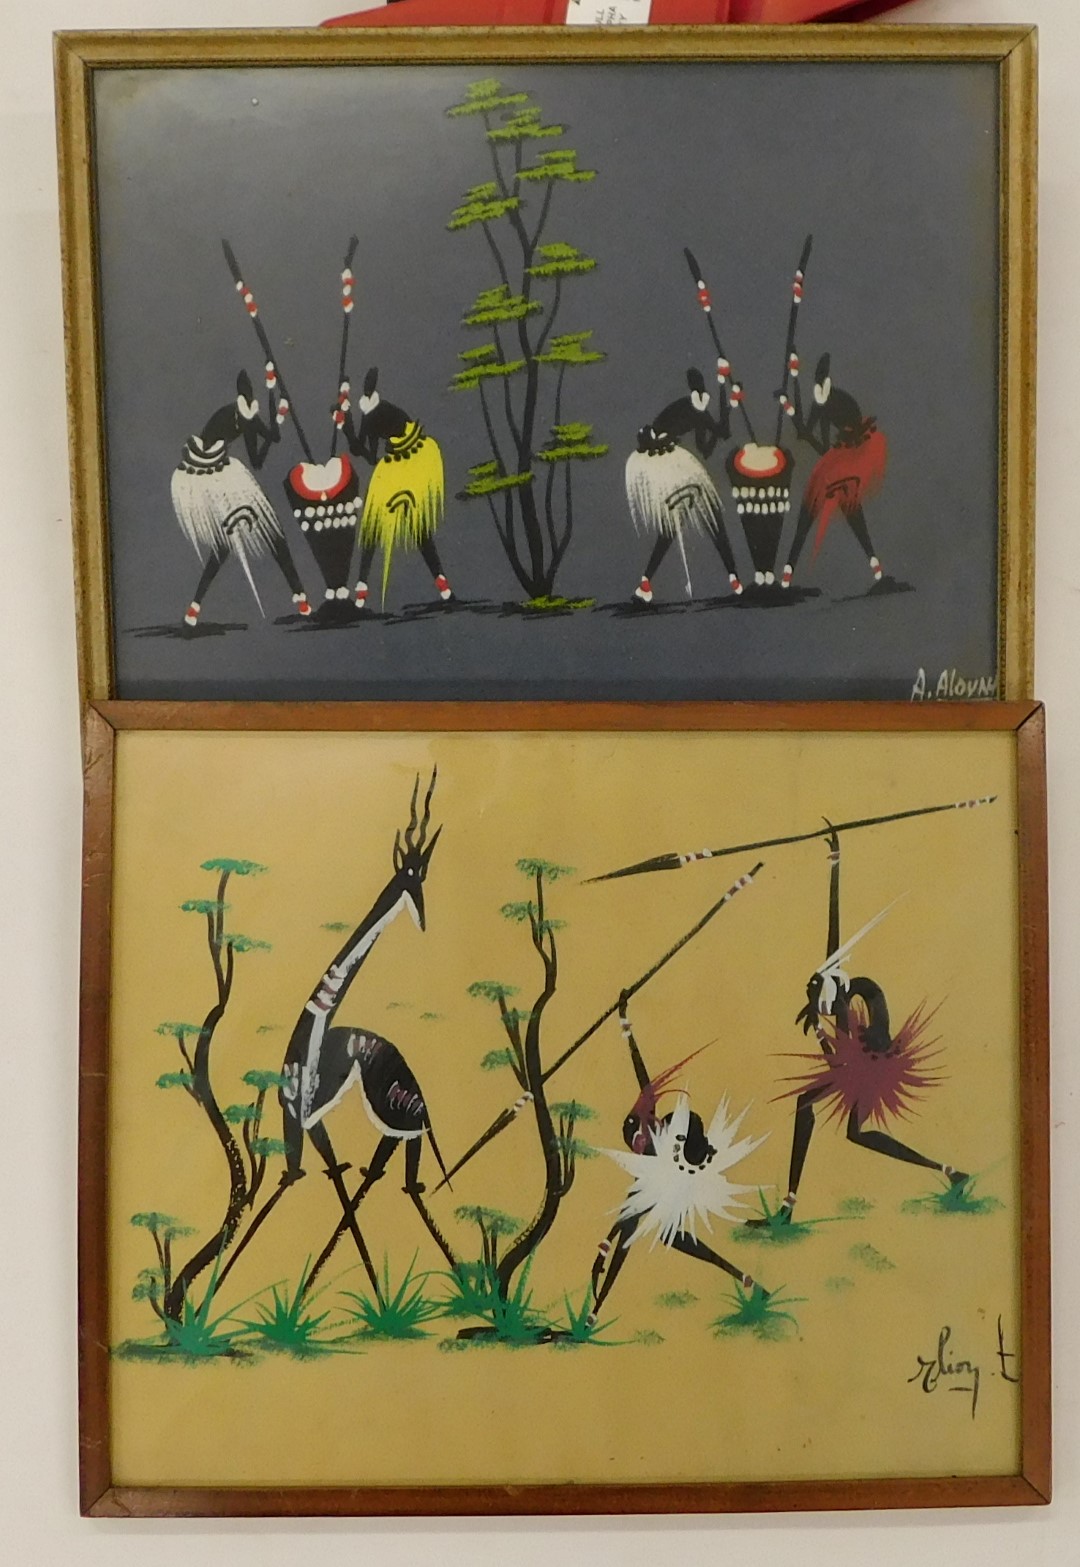 Aboriginal school after Elioy and Alovna, figures, prints, 23cm x 29cm, framed and glazed. (2)